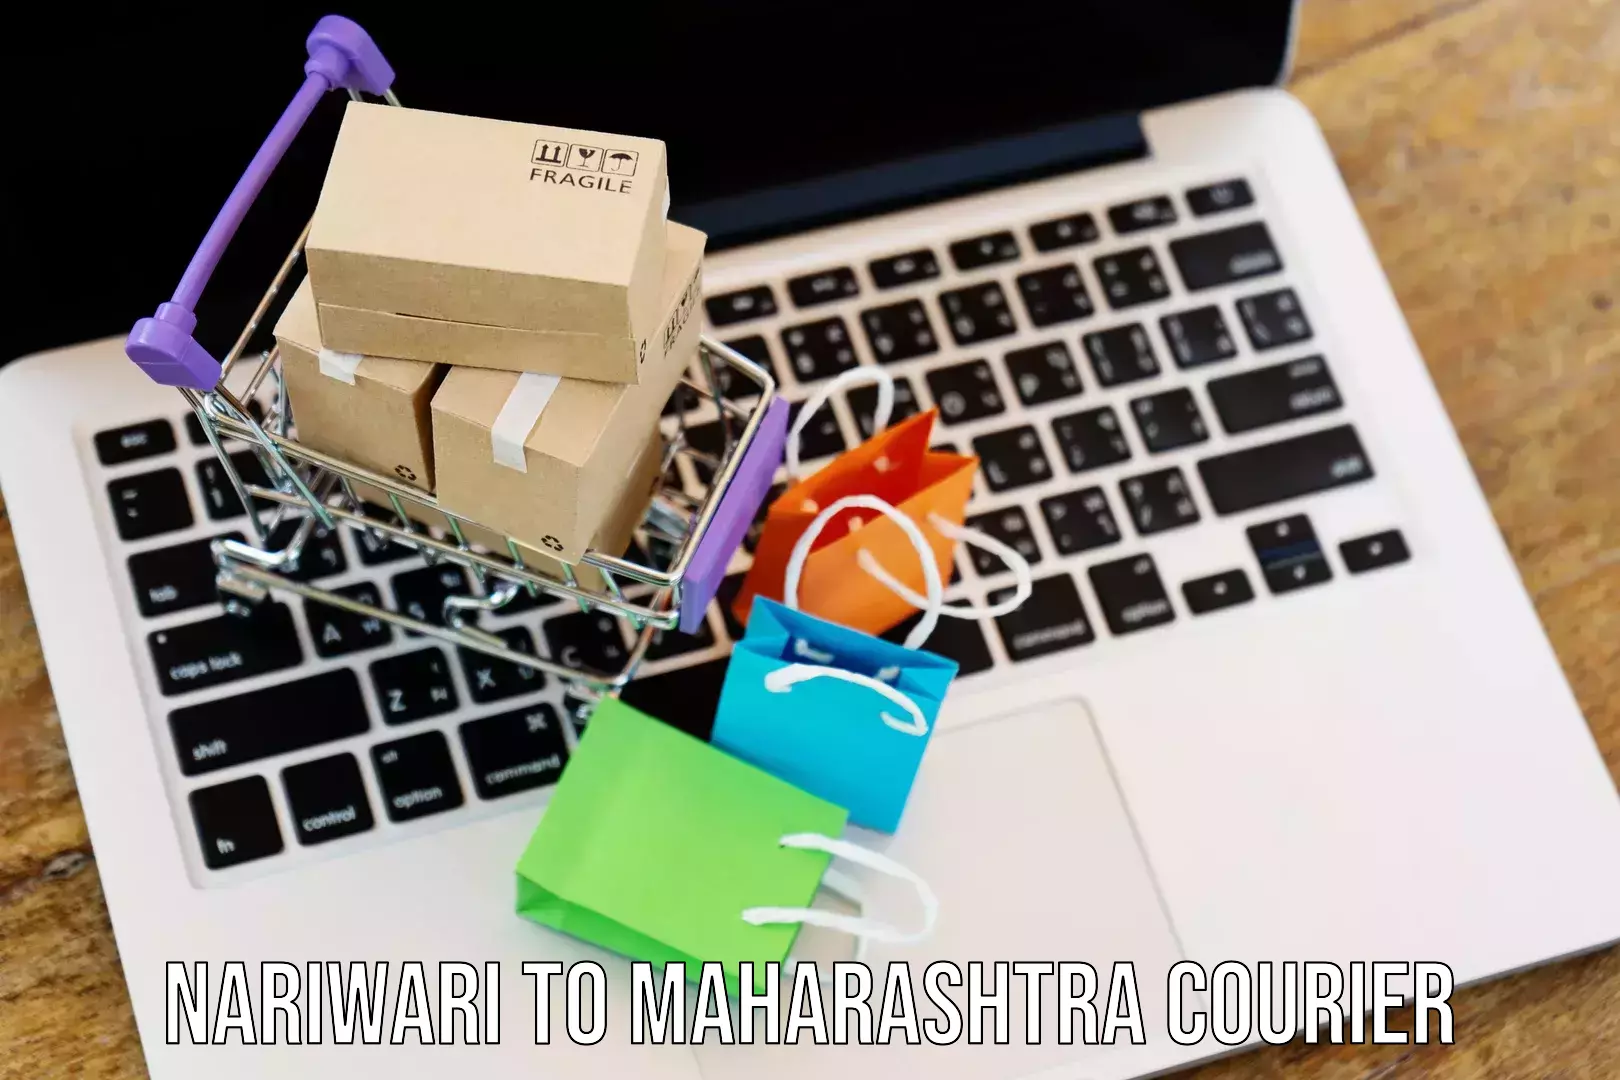 Courier service innovation Nariwari to Vasmat